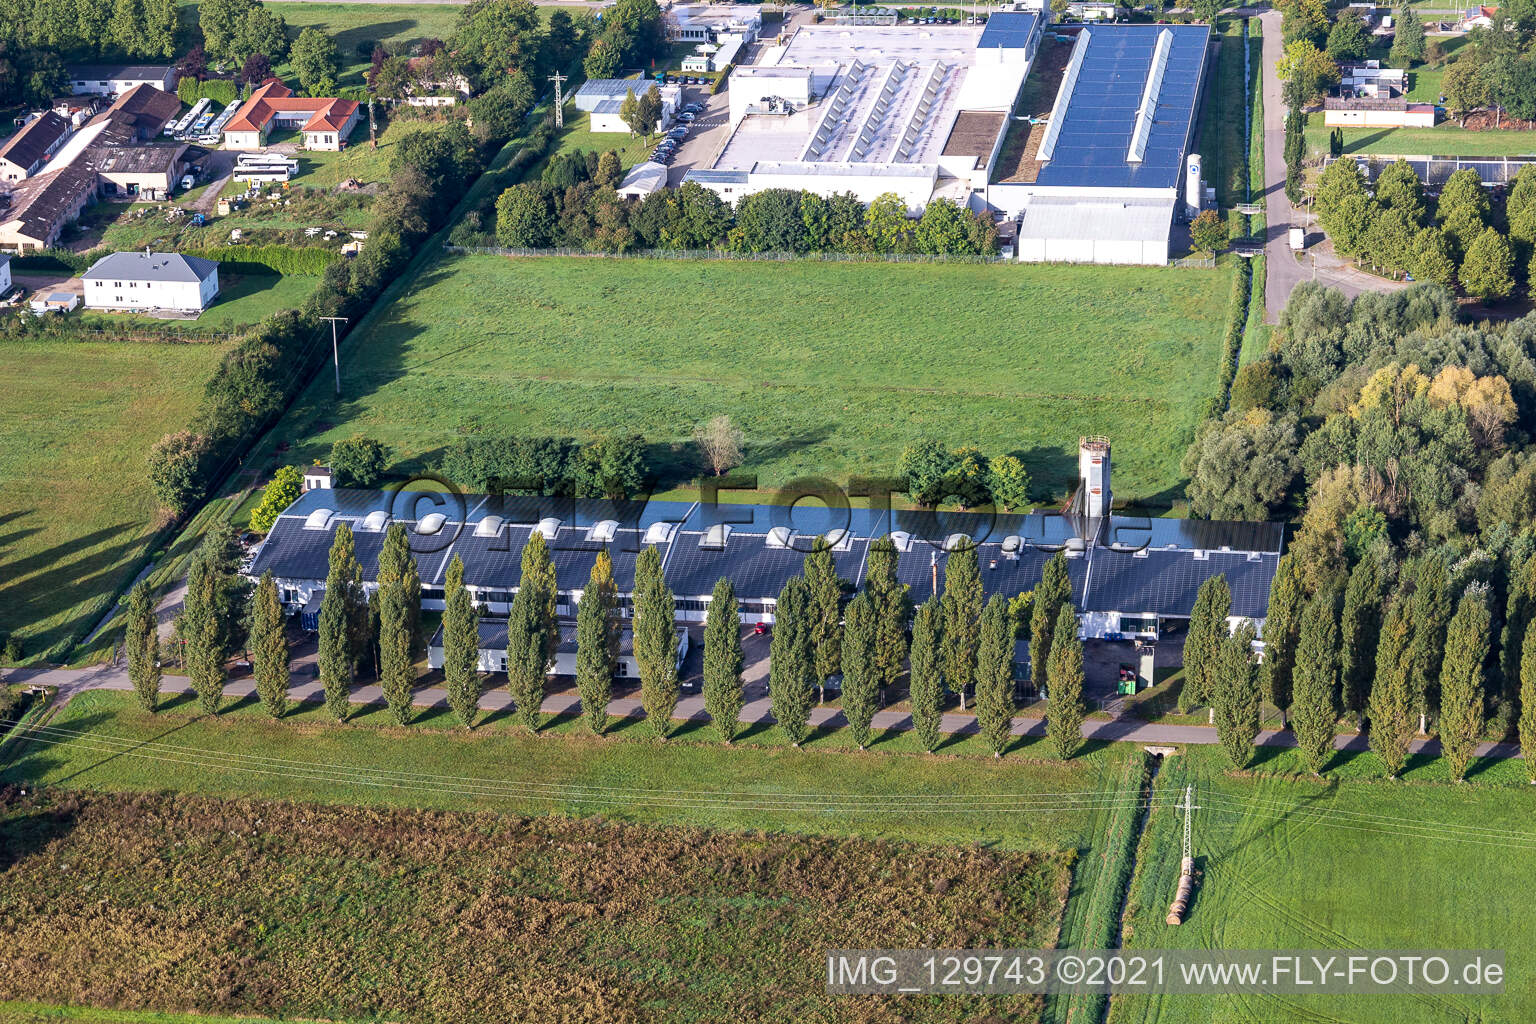 Aerial view of Cactus Druck & Verlags-GmbH in the district Schaidt in Wörth am Rhein in the state Rhineland-Palatinate, Germany